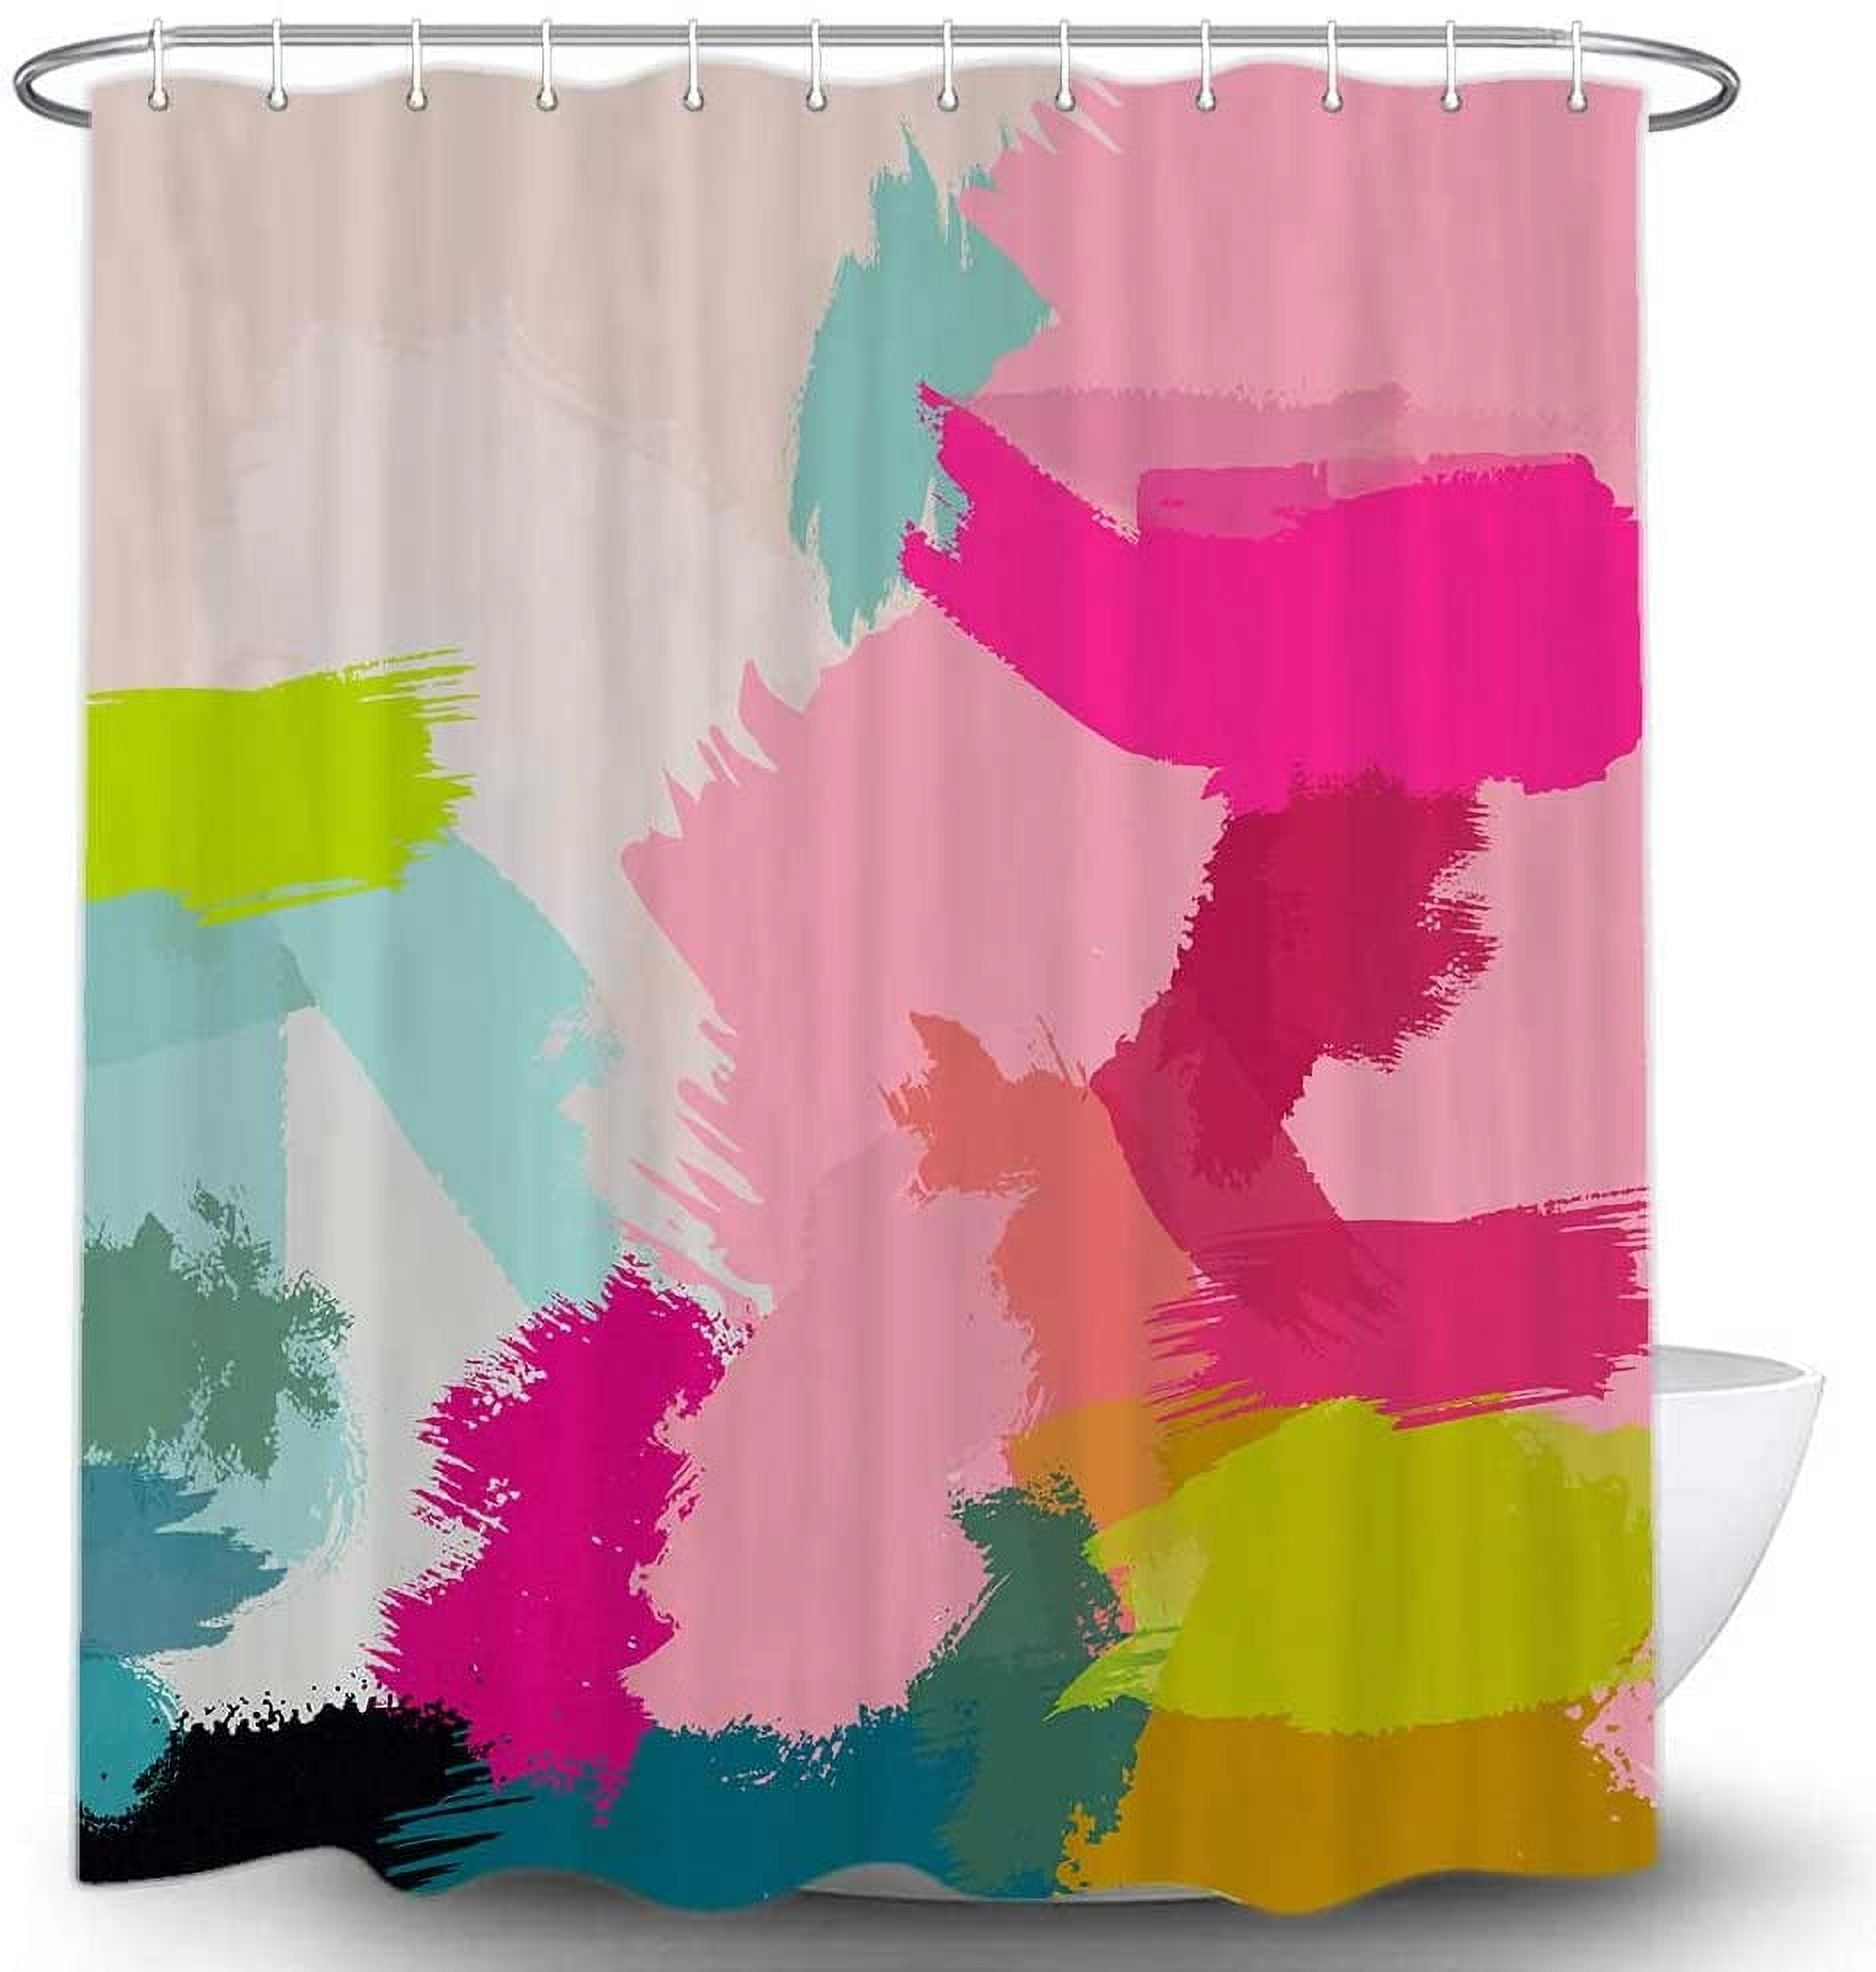 Marbled Rippled Shower Curtain Creative Home Decor Aesthetic